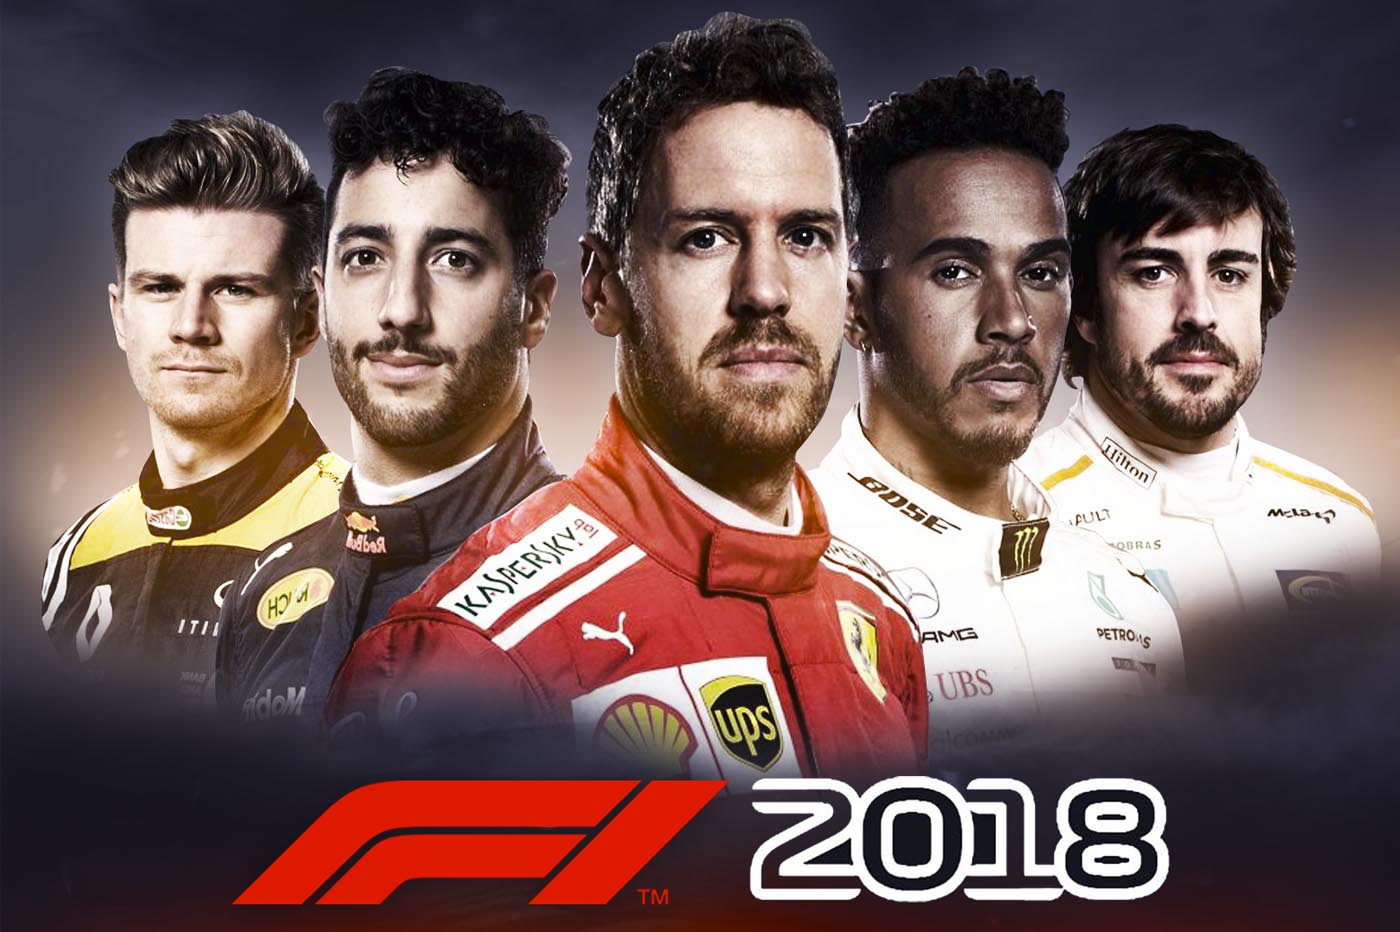 Analisis F1 2018 PS4